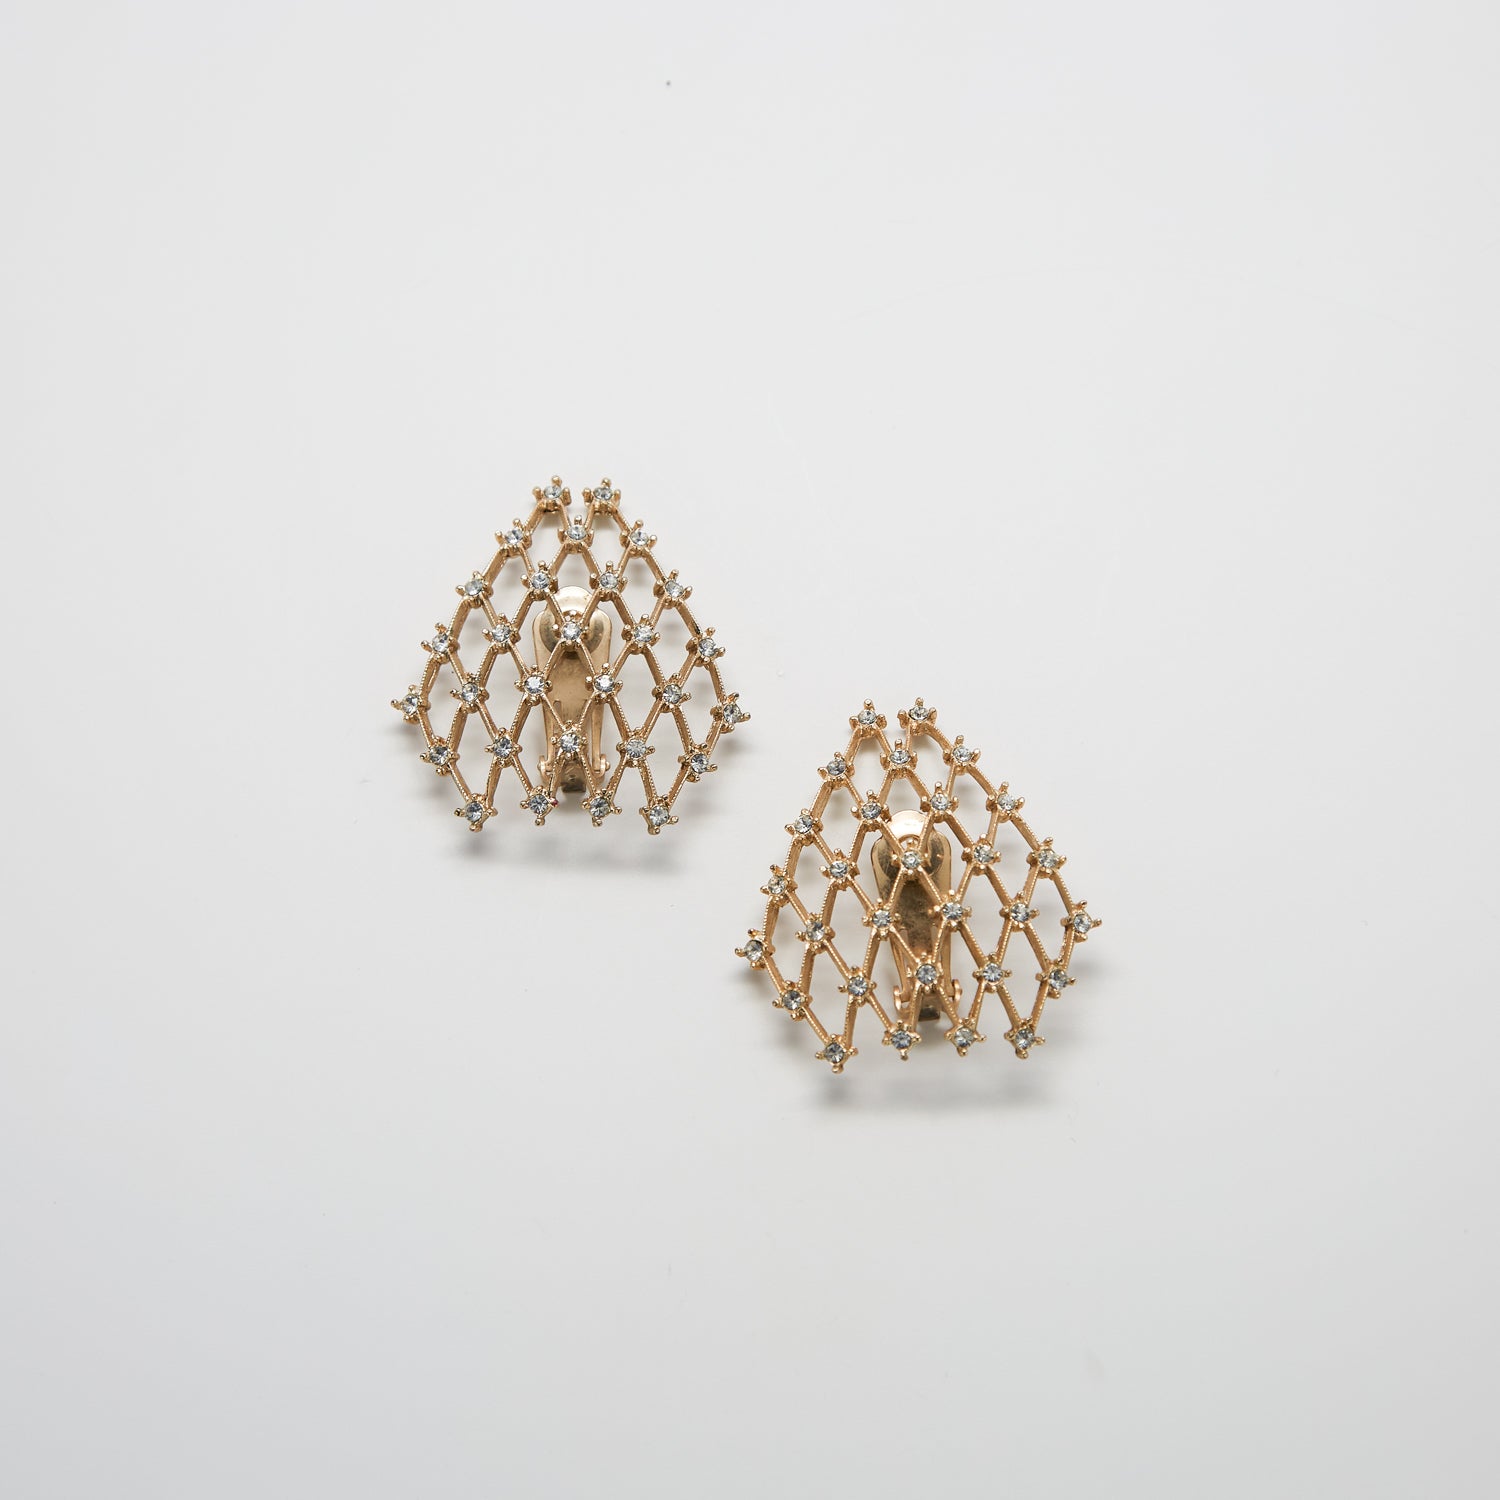 Vintage Pave Fishnet Earrings